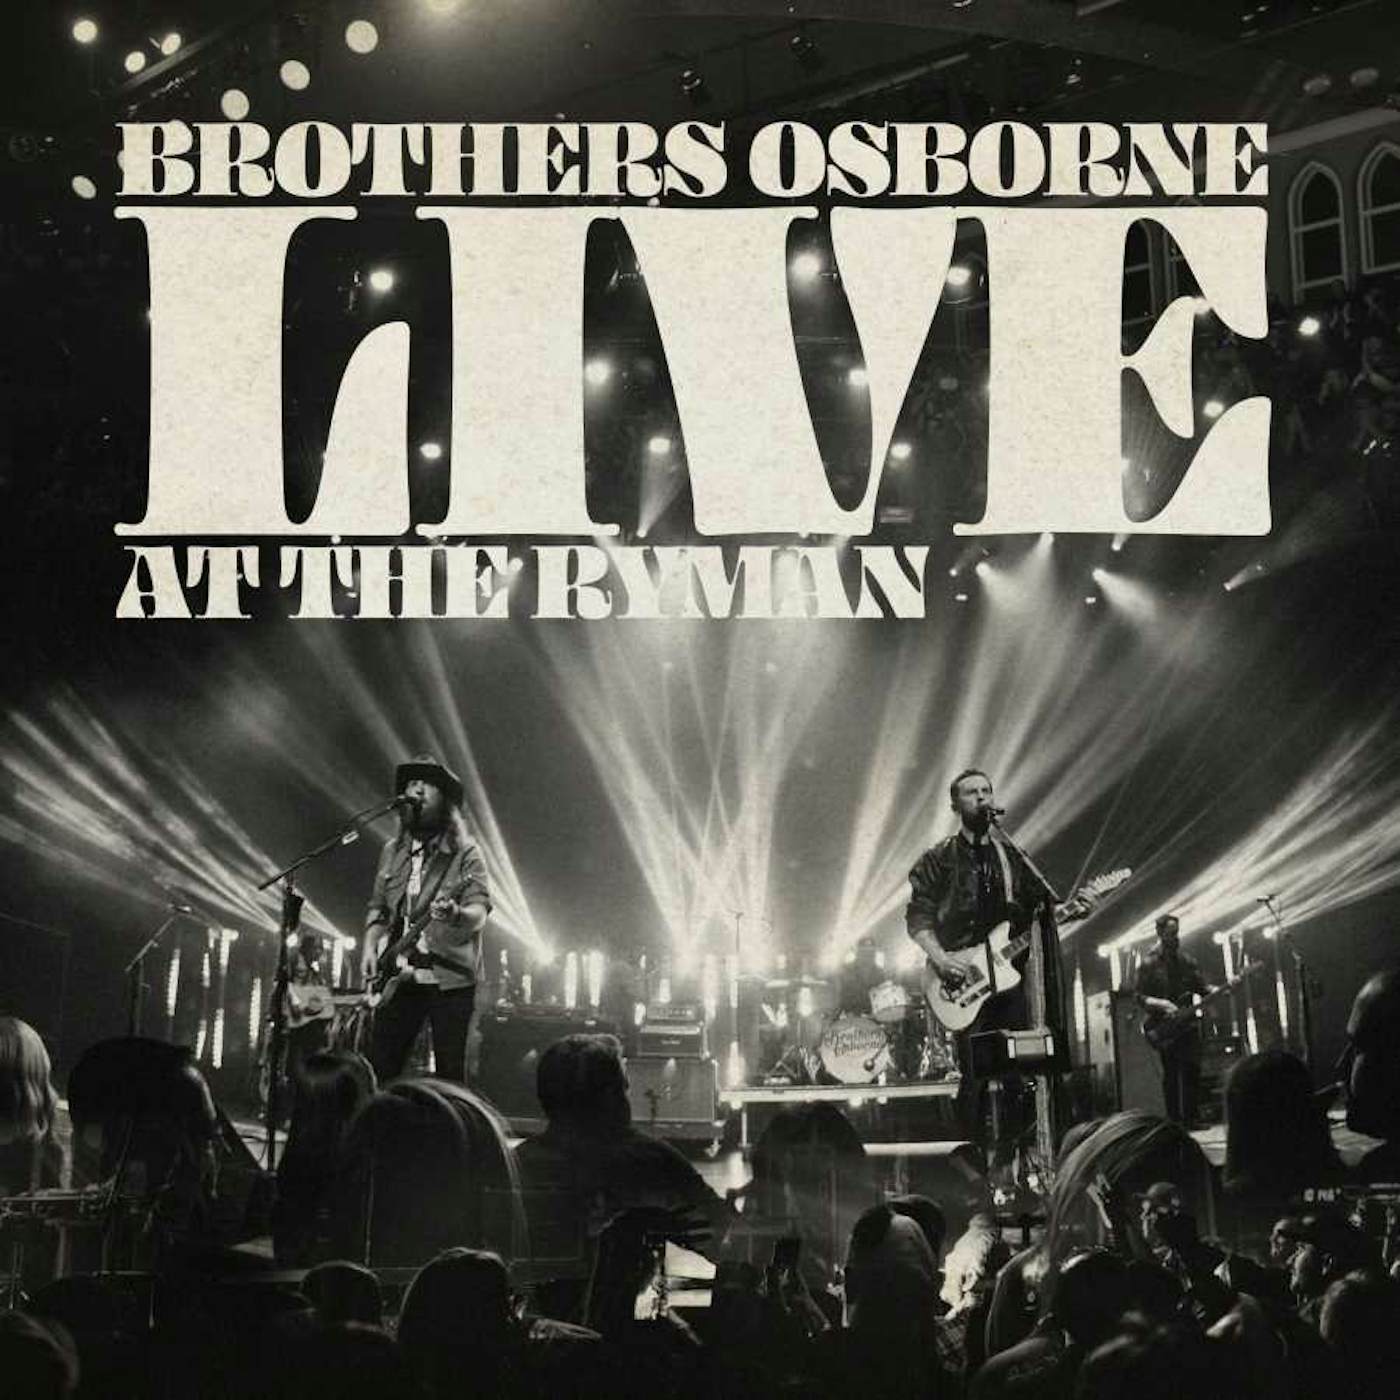 Brothers Osborne LIVE AT THE RYMAN (2LP) Vinyl Record